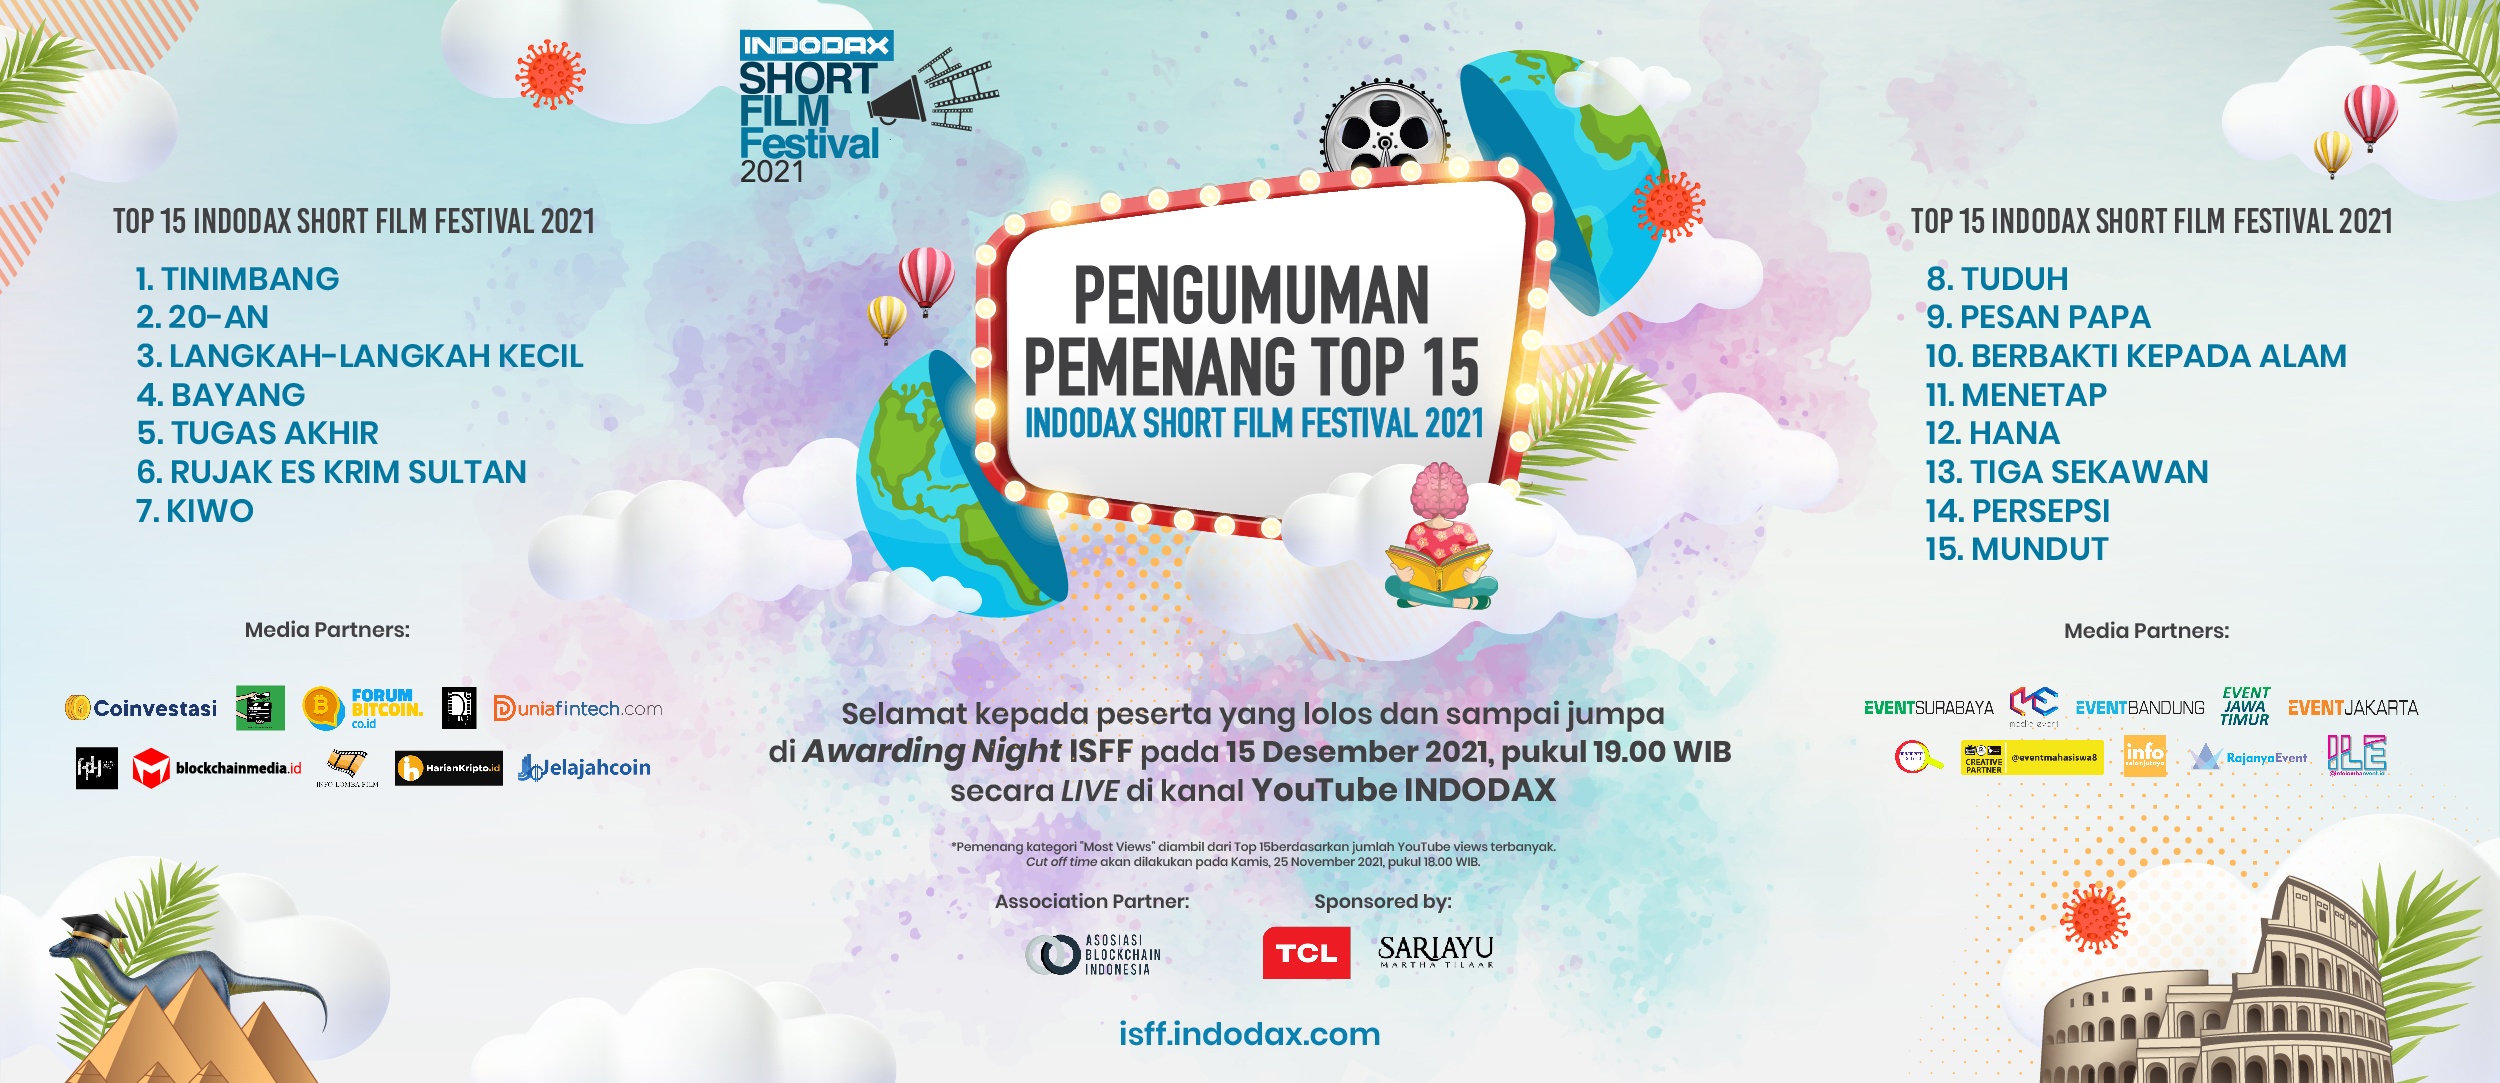 Pemenang Top 15 Indodax Short Film Festival (ISFF) 2021